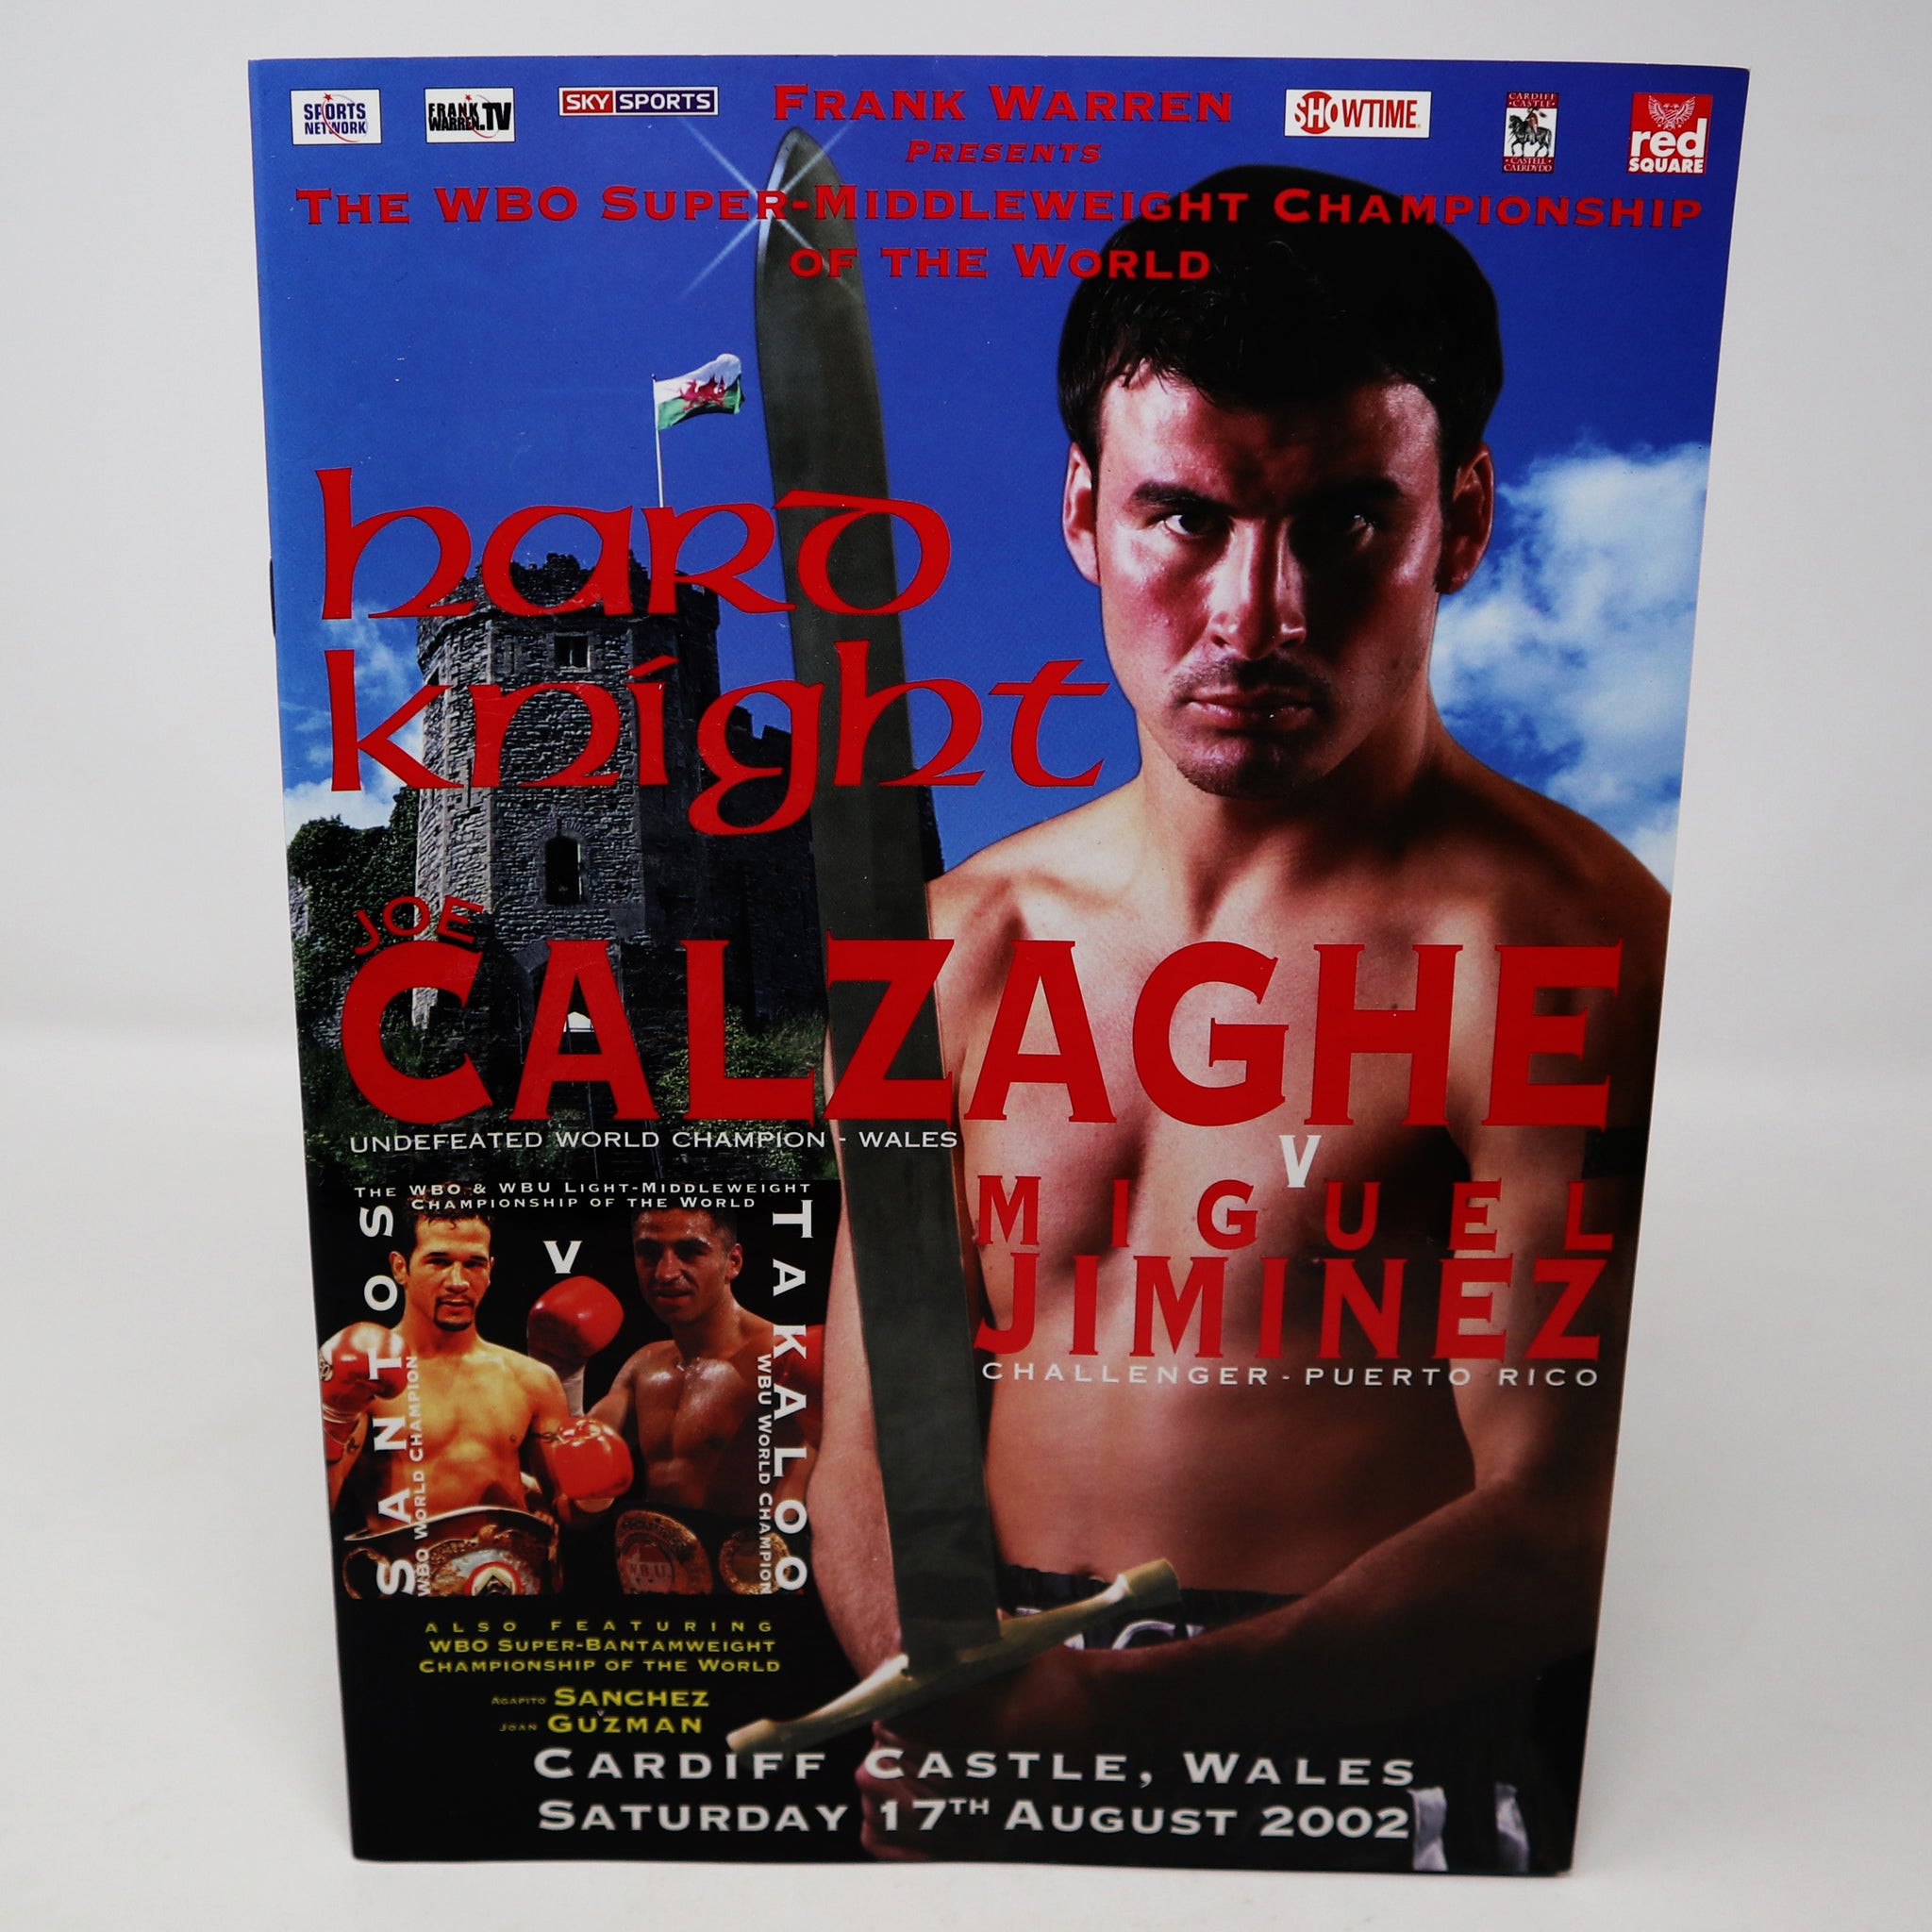 Hard Knight Joe Calzaghe vs Miguel Jiminez Saturday 17th August 2002 Cardiff Castle Wales Boxing Sports Programme Program Book